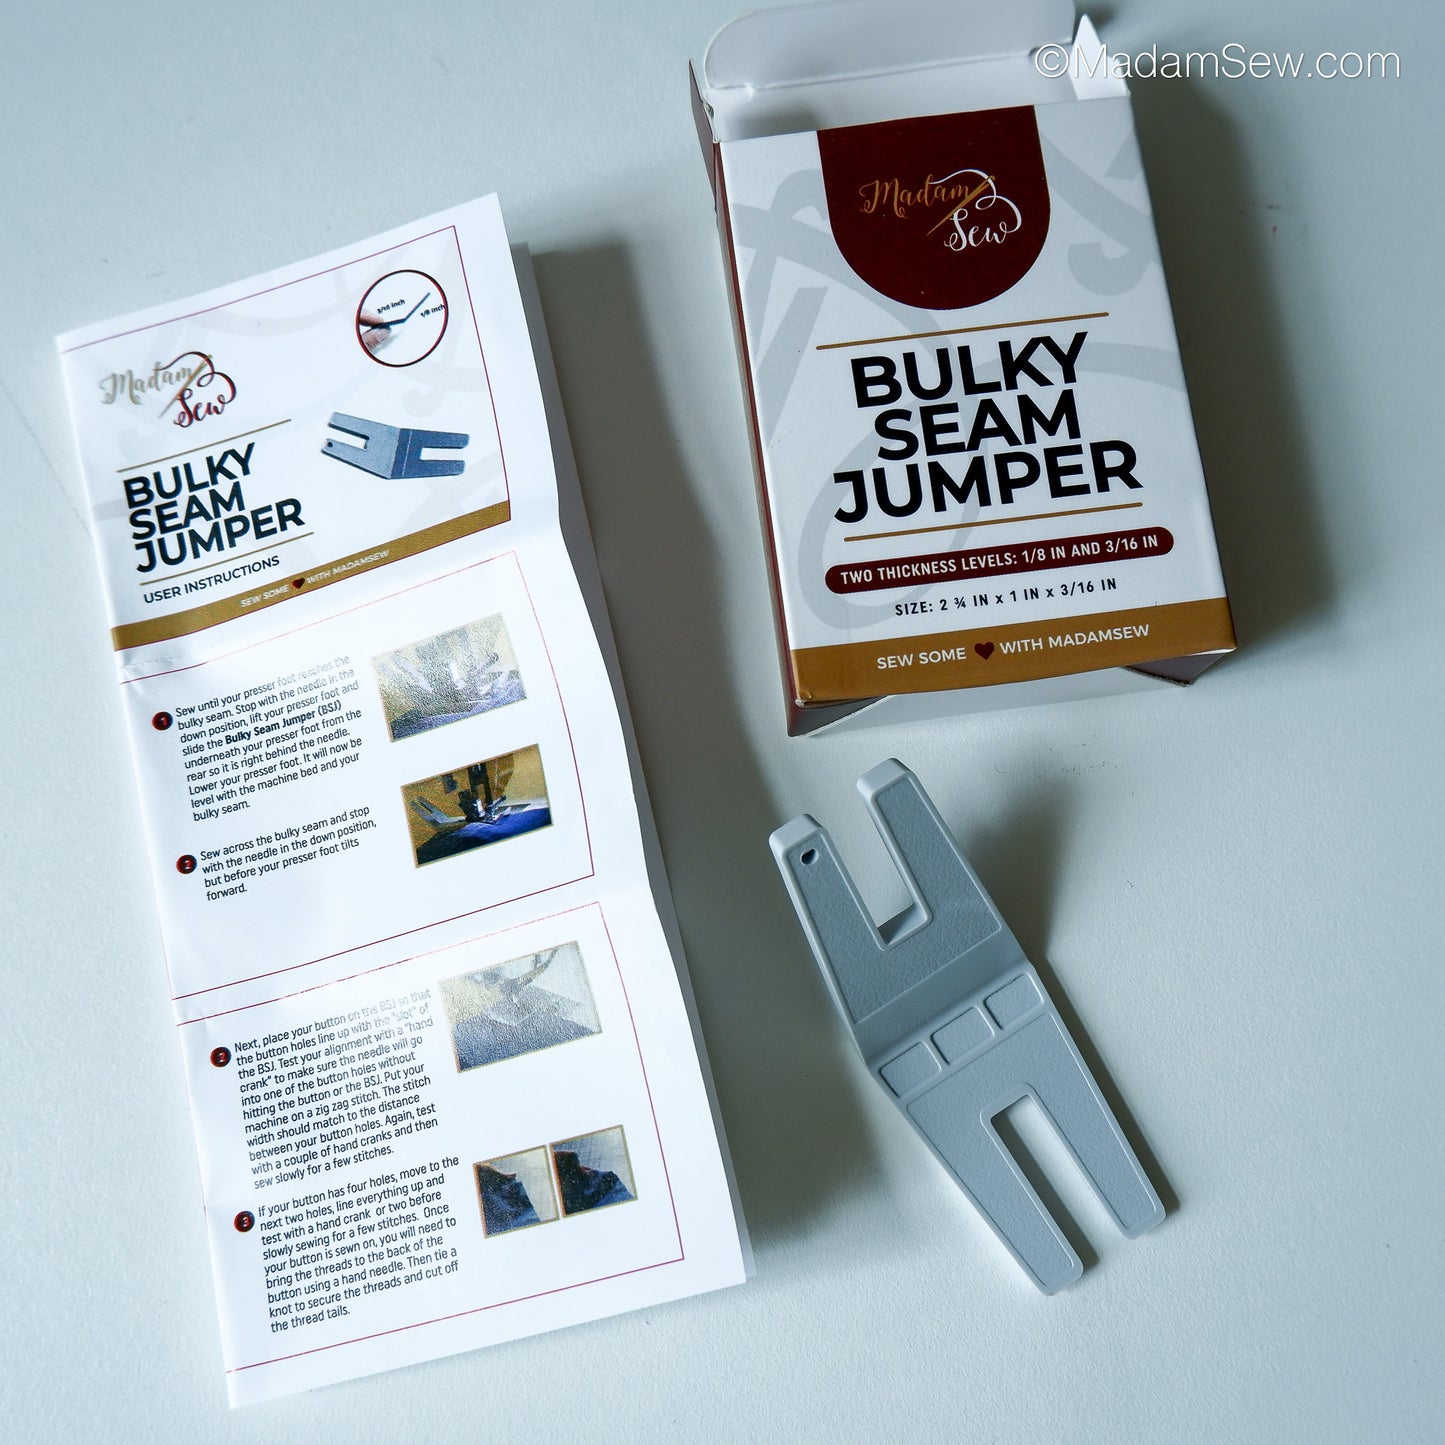 Bulky Seam Jumper, box and insert.